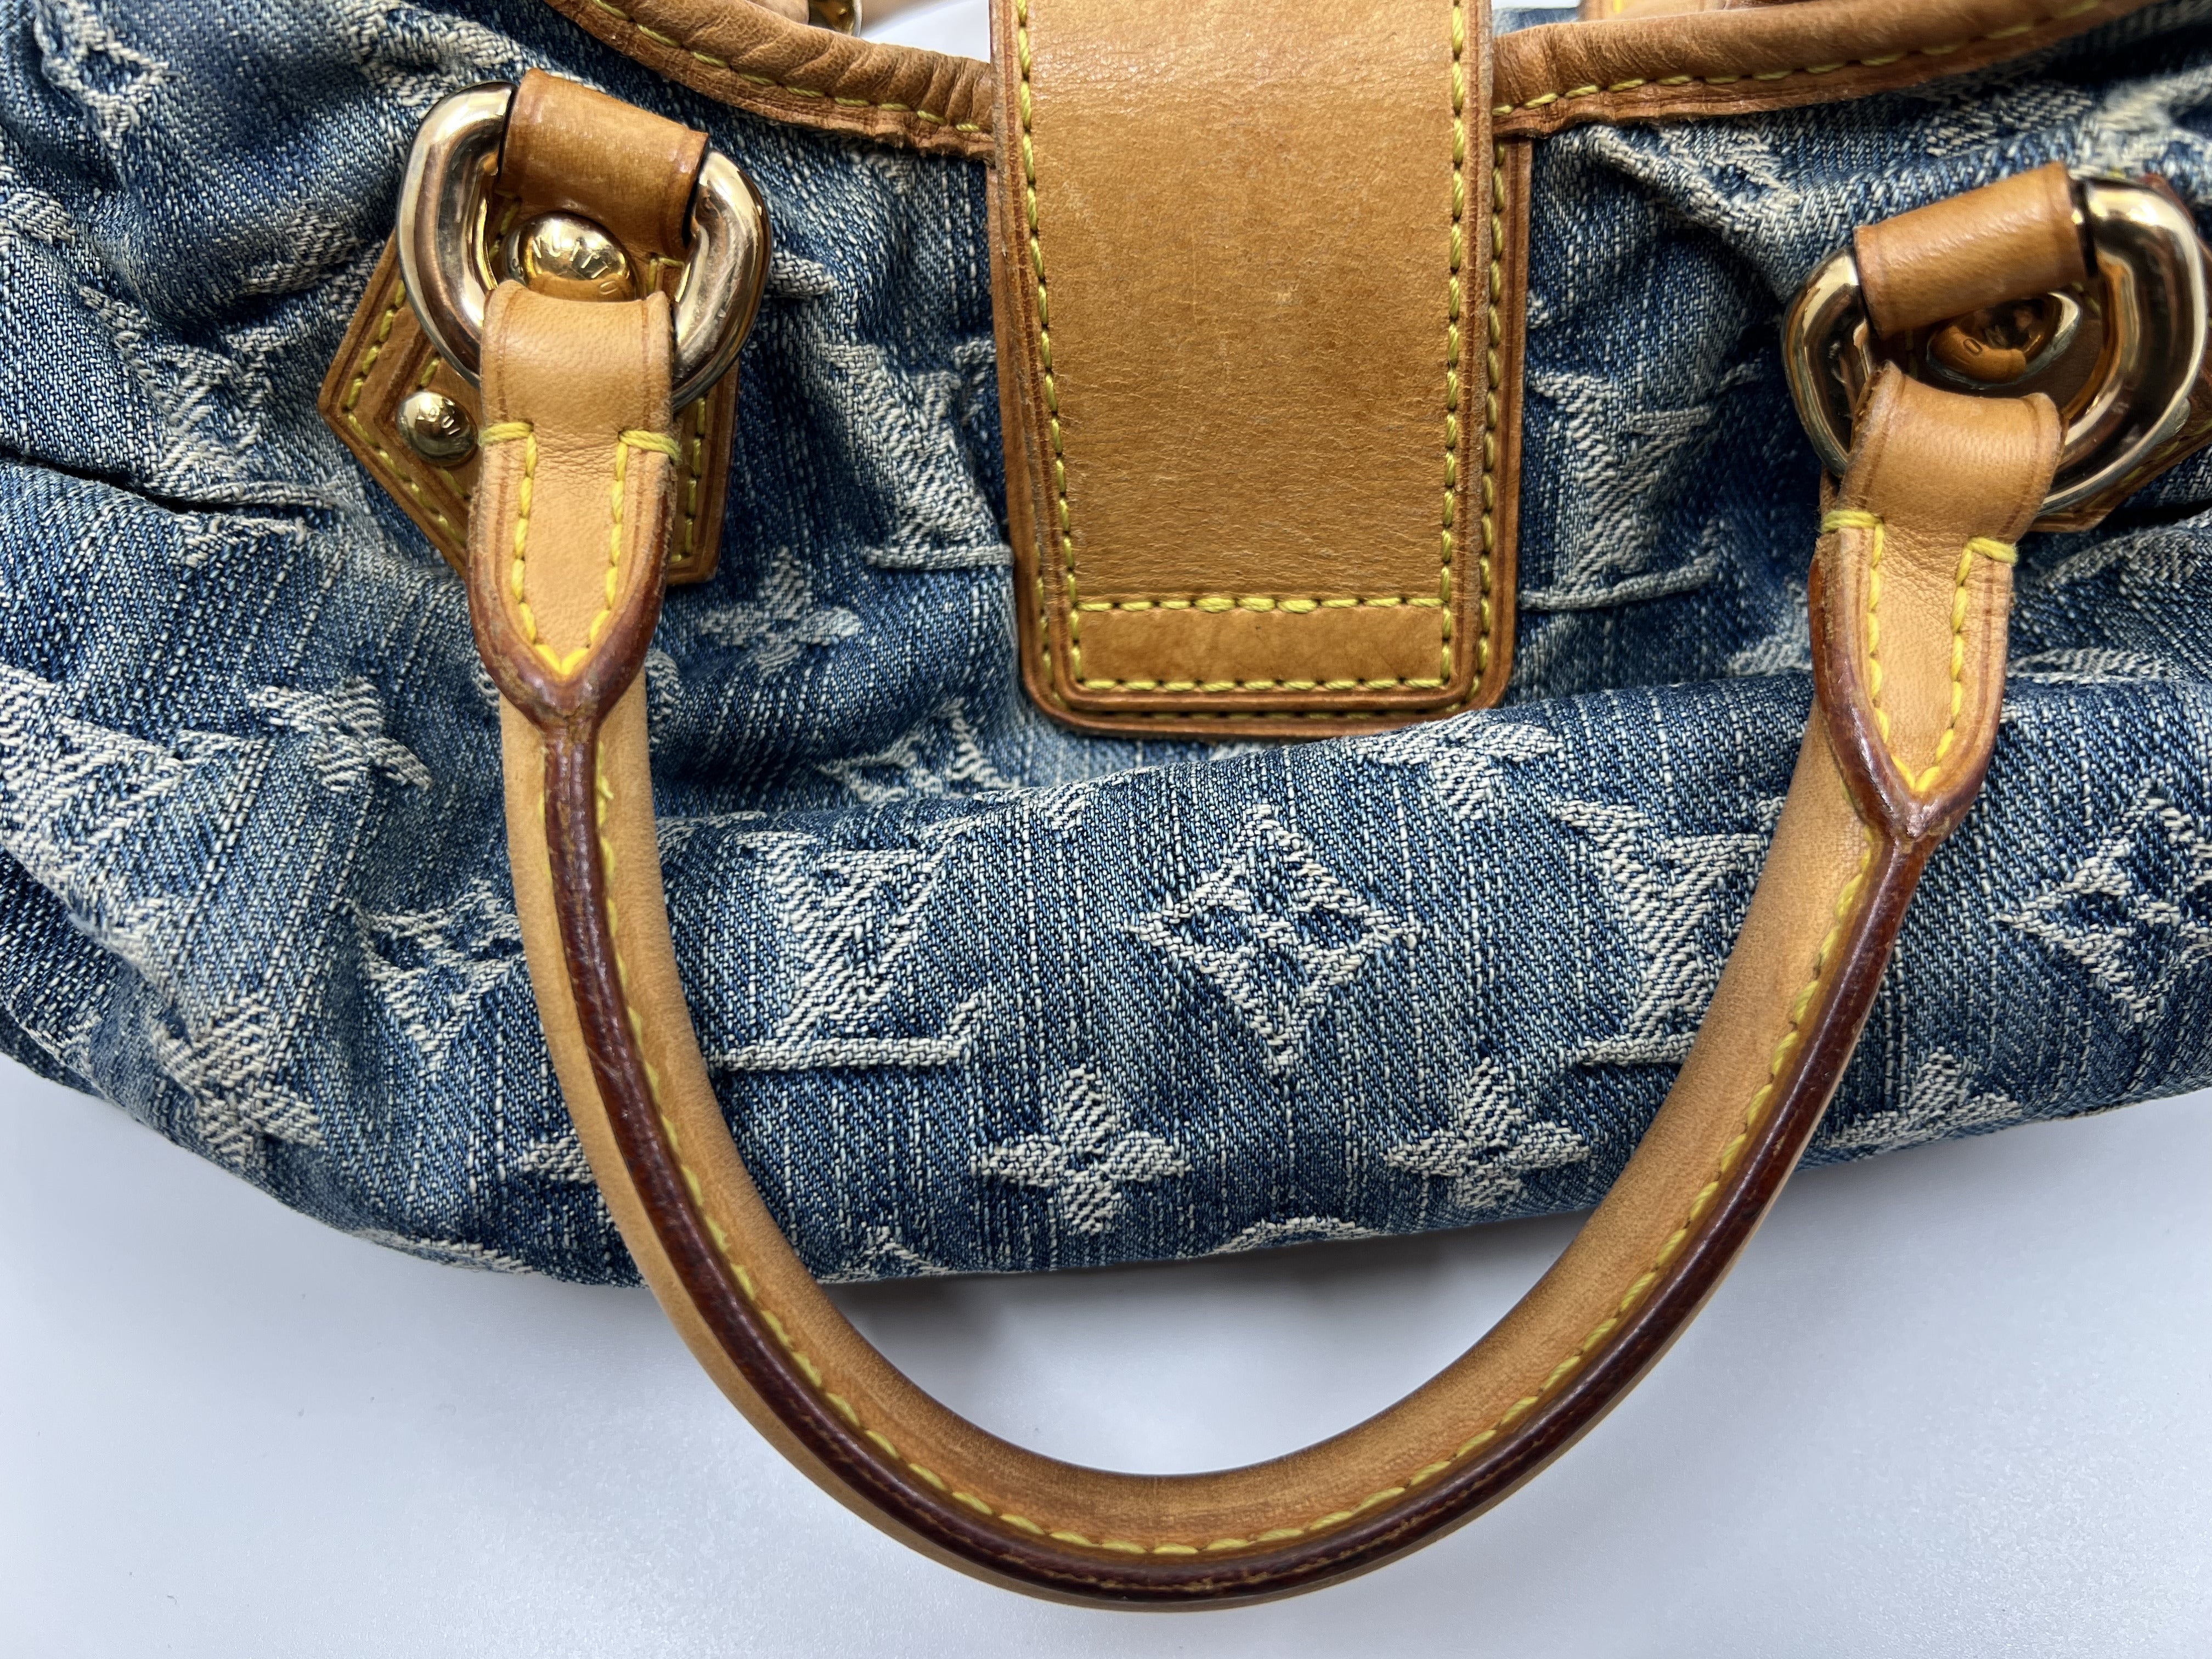 Louis Vuitton Blue Denim Ab Pleaty Bag